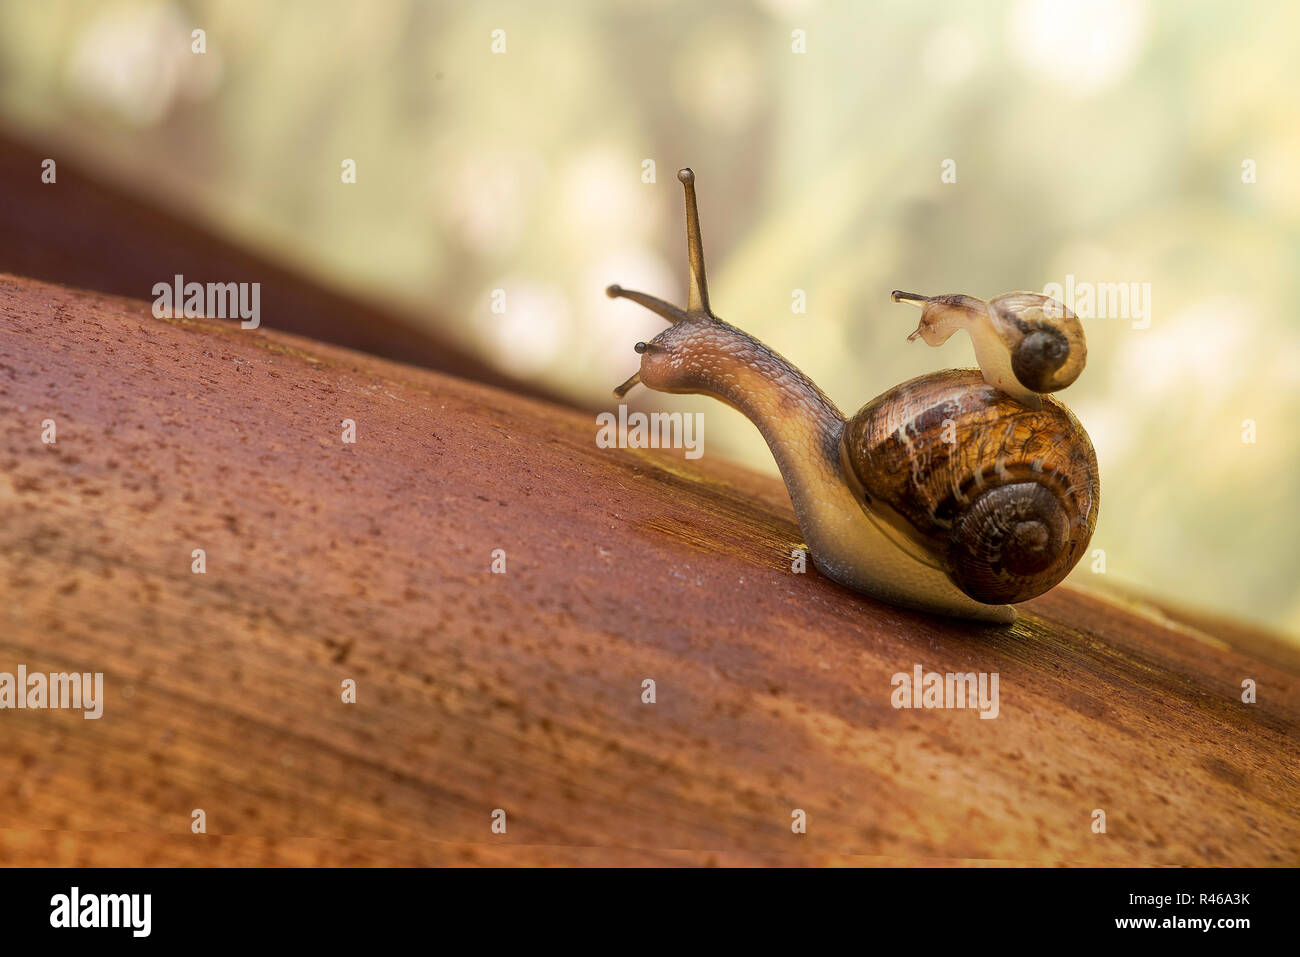 Snails Stock Photo